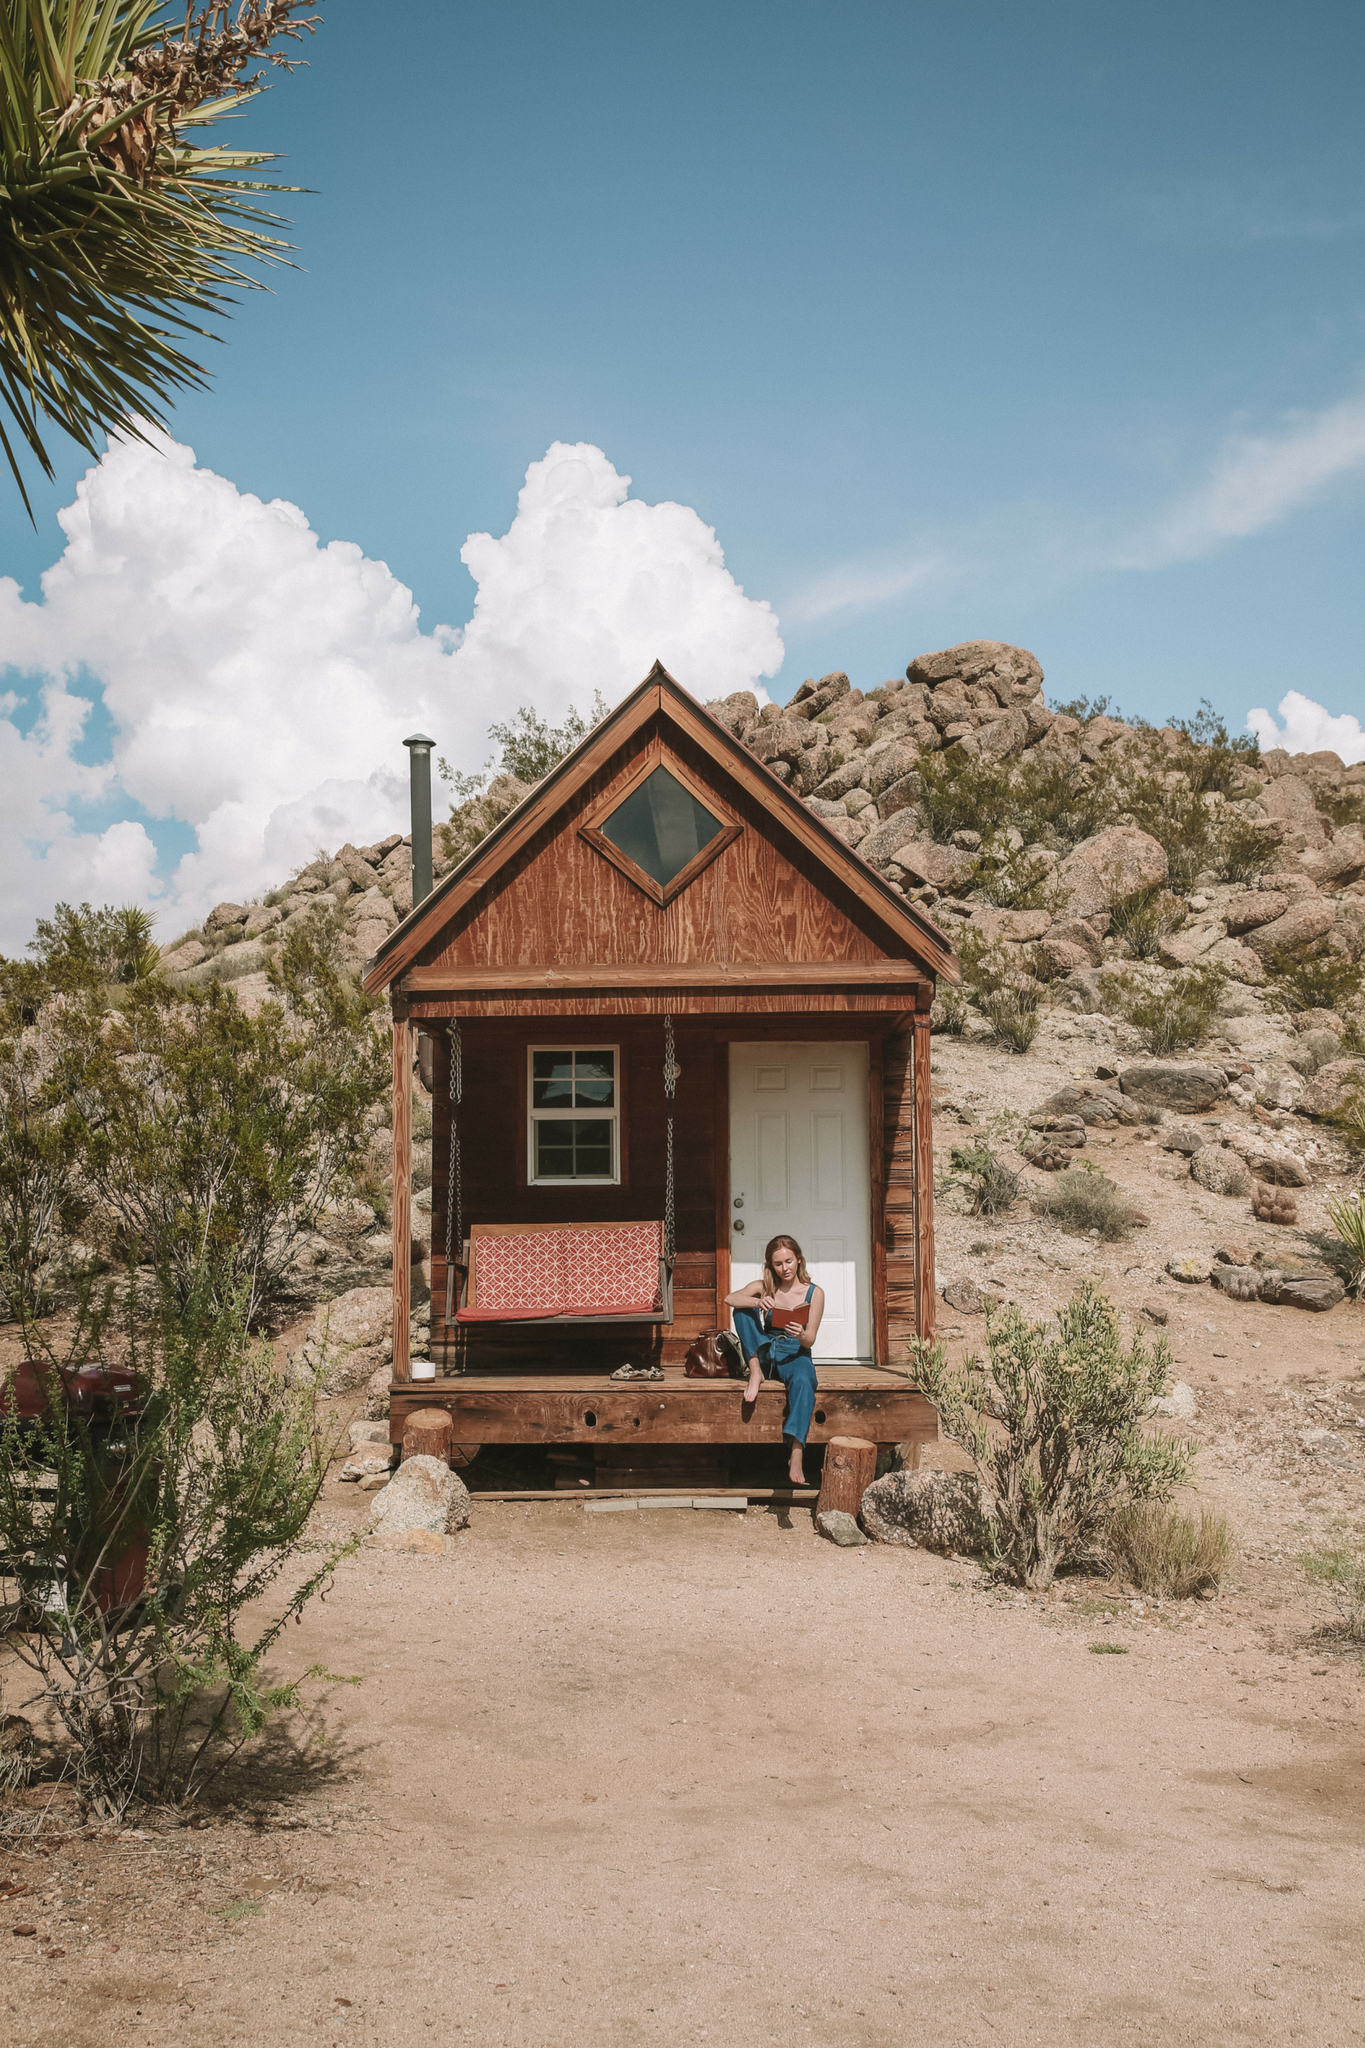 A Tiny Cabin in Joshua Tree | WORLD OF WANDERLUST